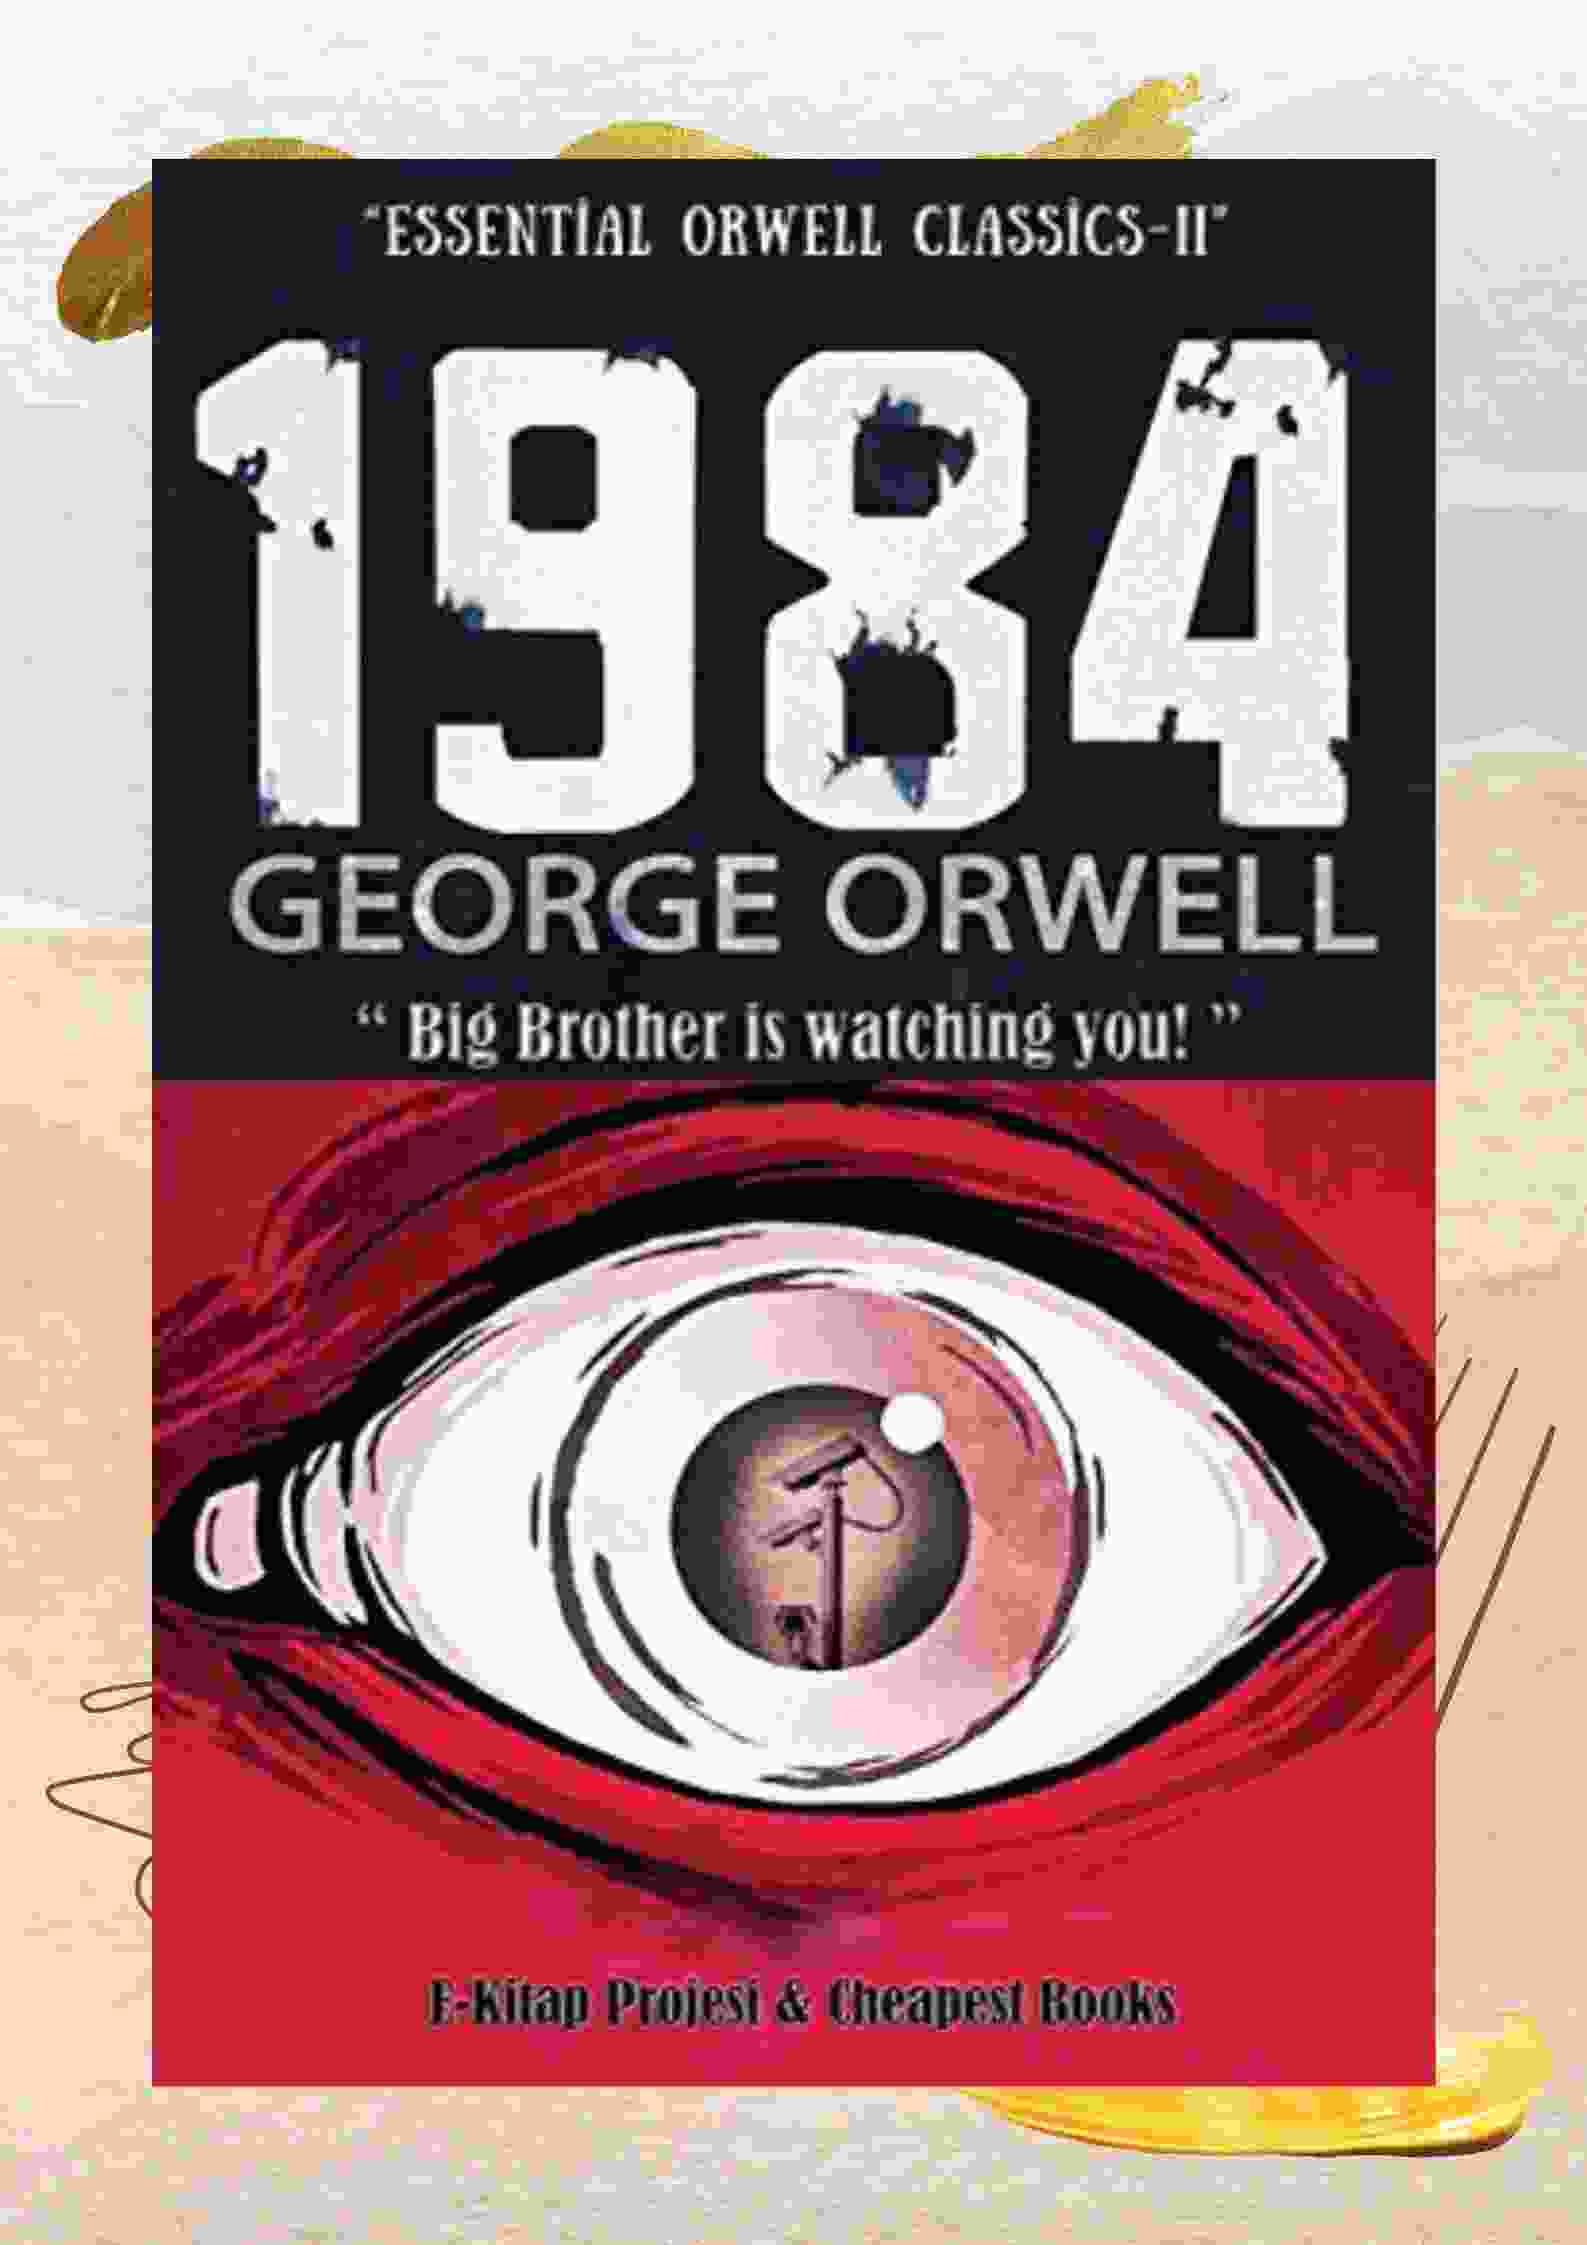 1984 by George Orwell Full Book Summary Free